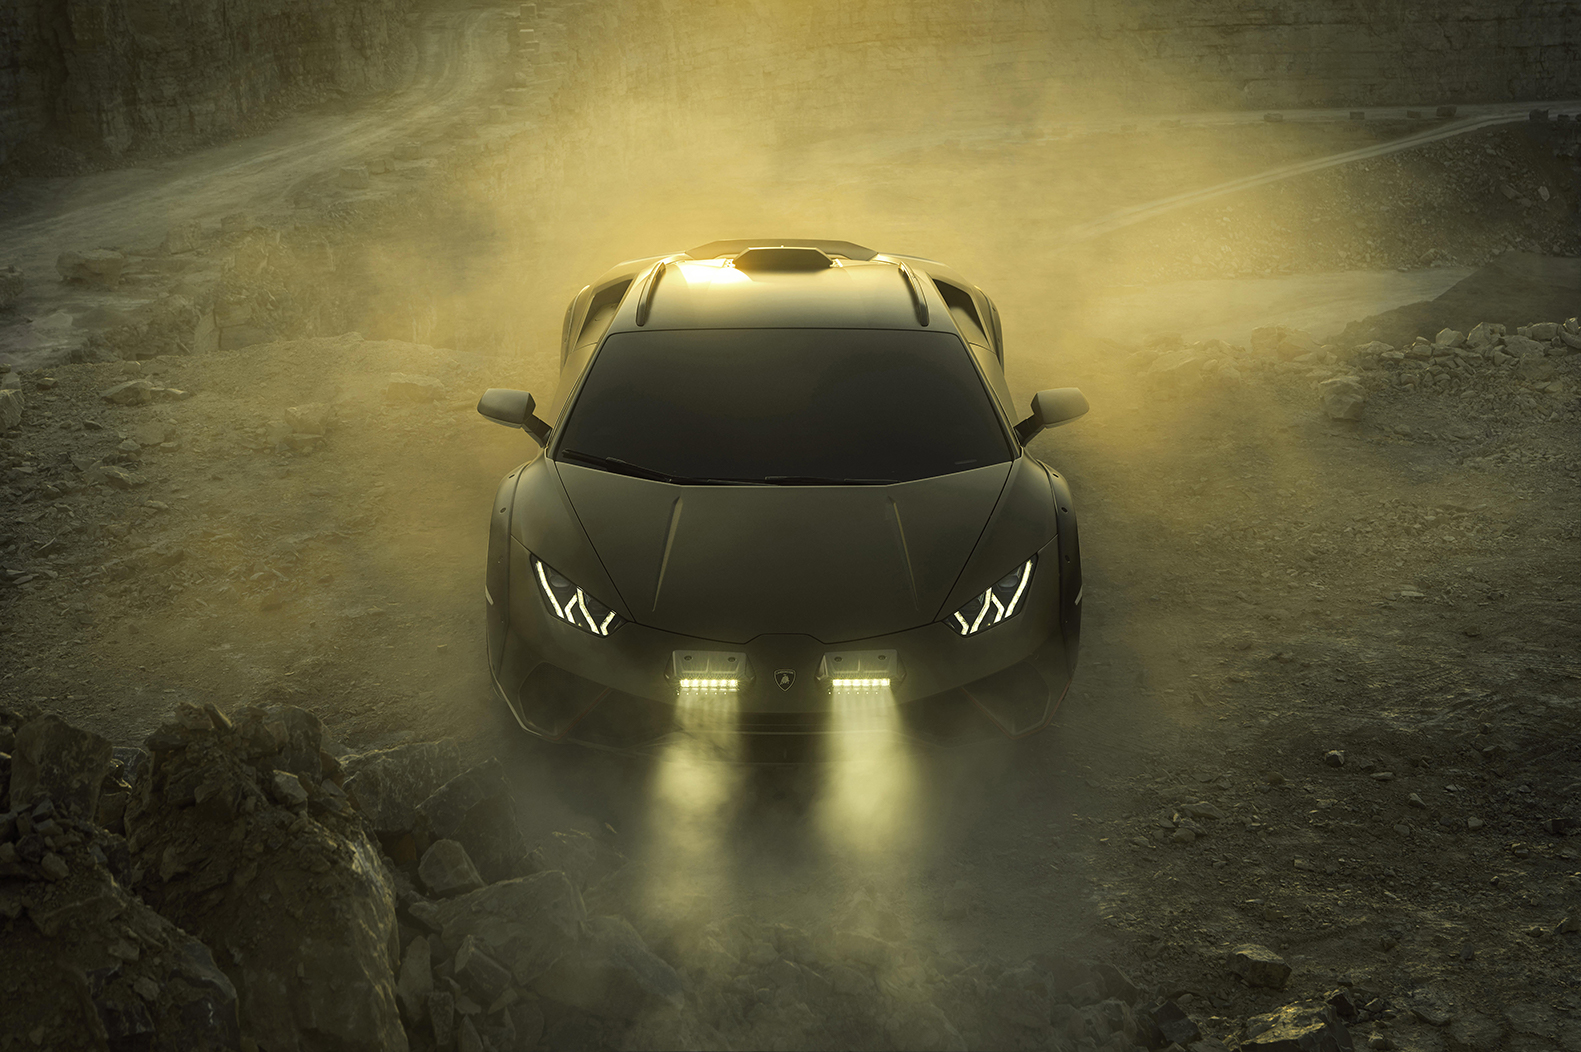 M2now.com - Off-Road With The Lamborghini Huracán Sterrato